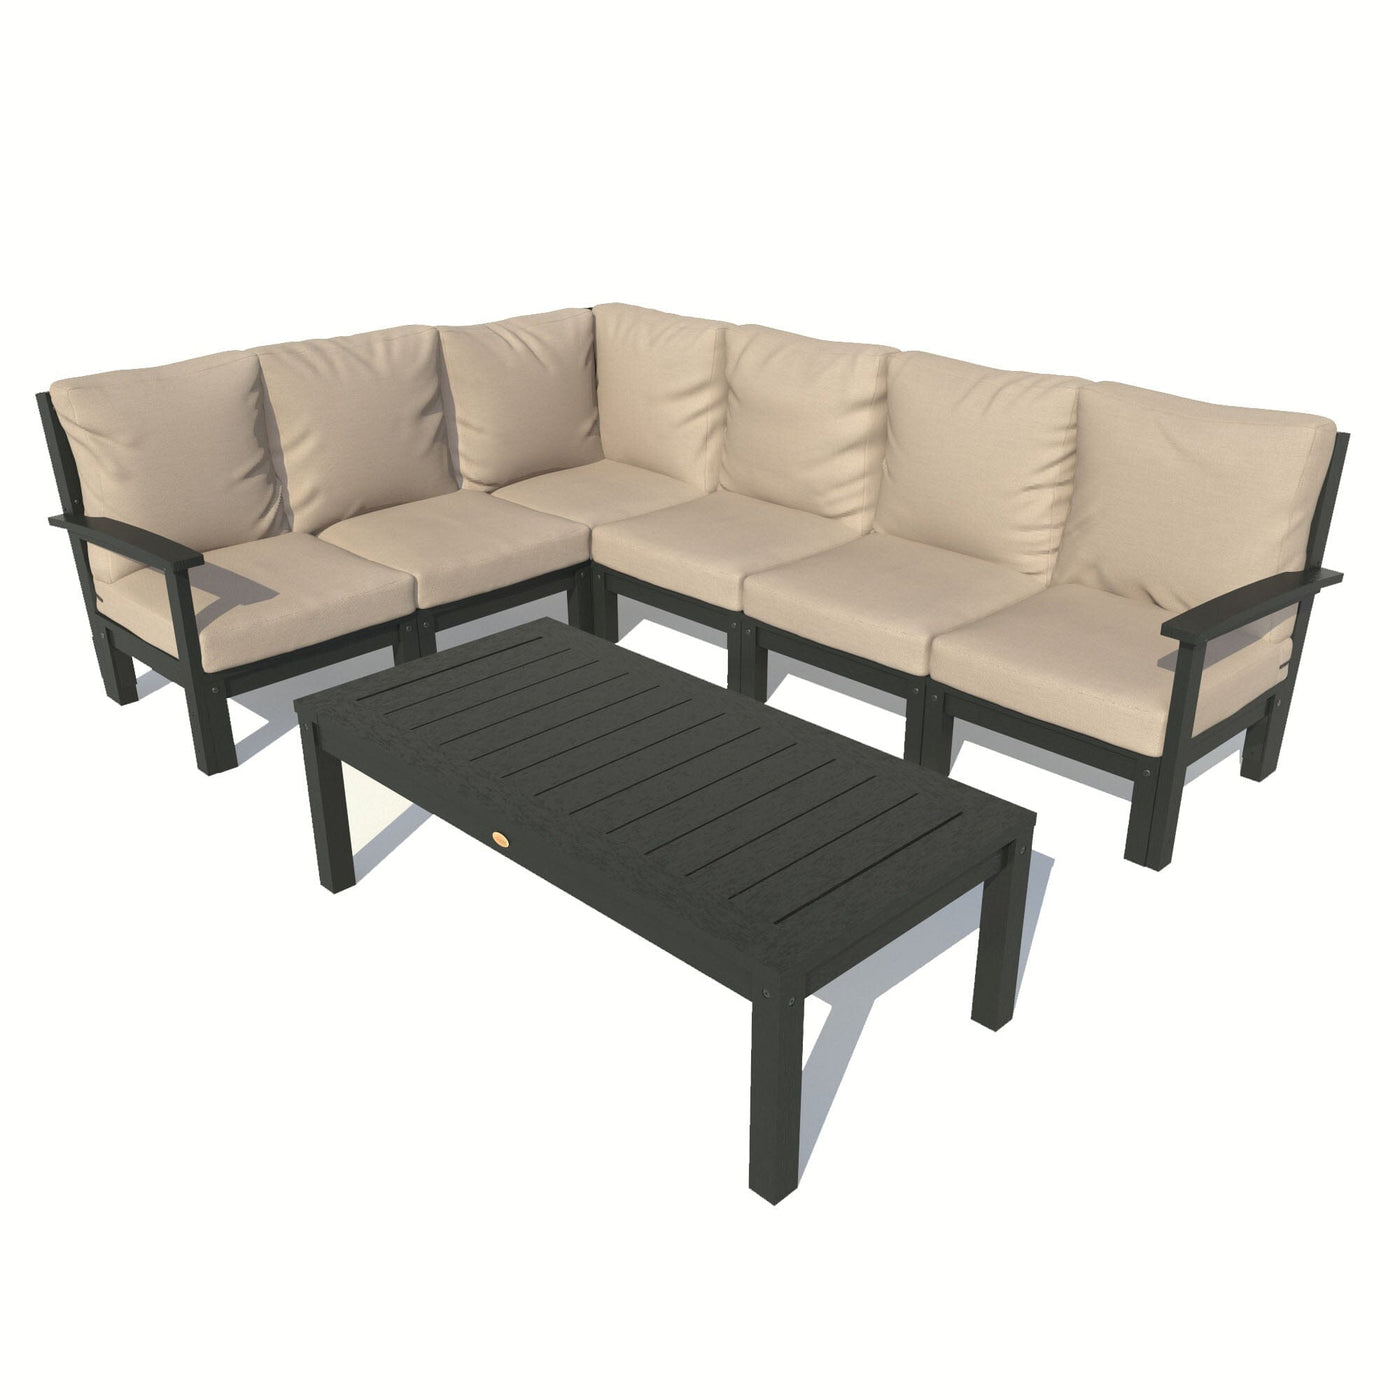 Bespoke Deep Seating: 7 Piece Sectional Sofa Set with Conversation Table Deep Seating Highwood USA Driftwood Black 